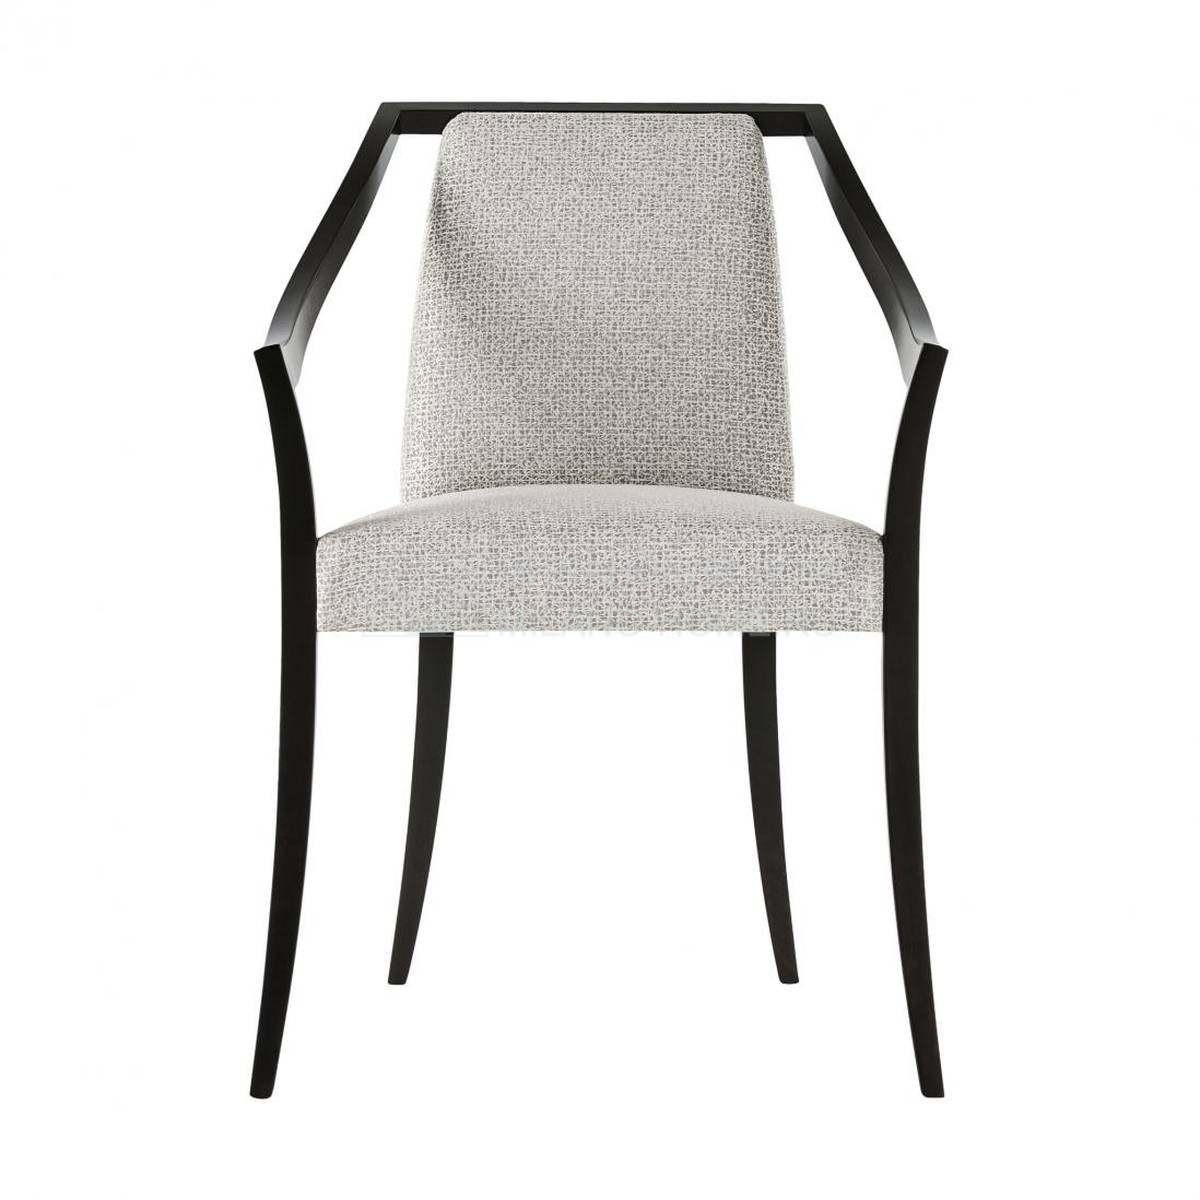 Полукресло Campiello Arm Chair из Италии фабрики RUBELLI Casa